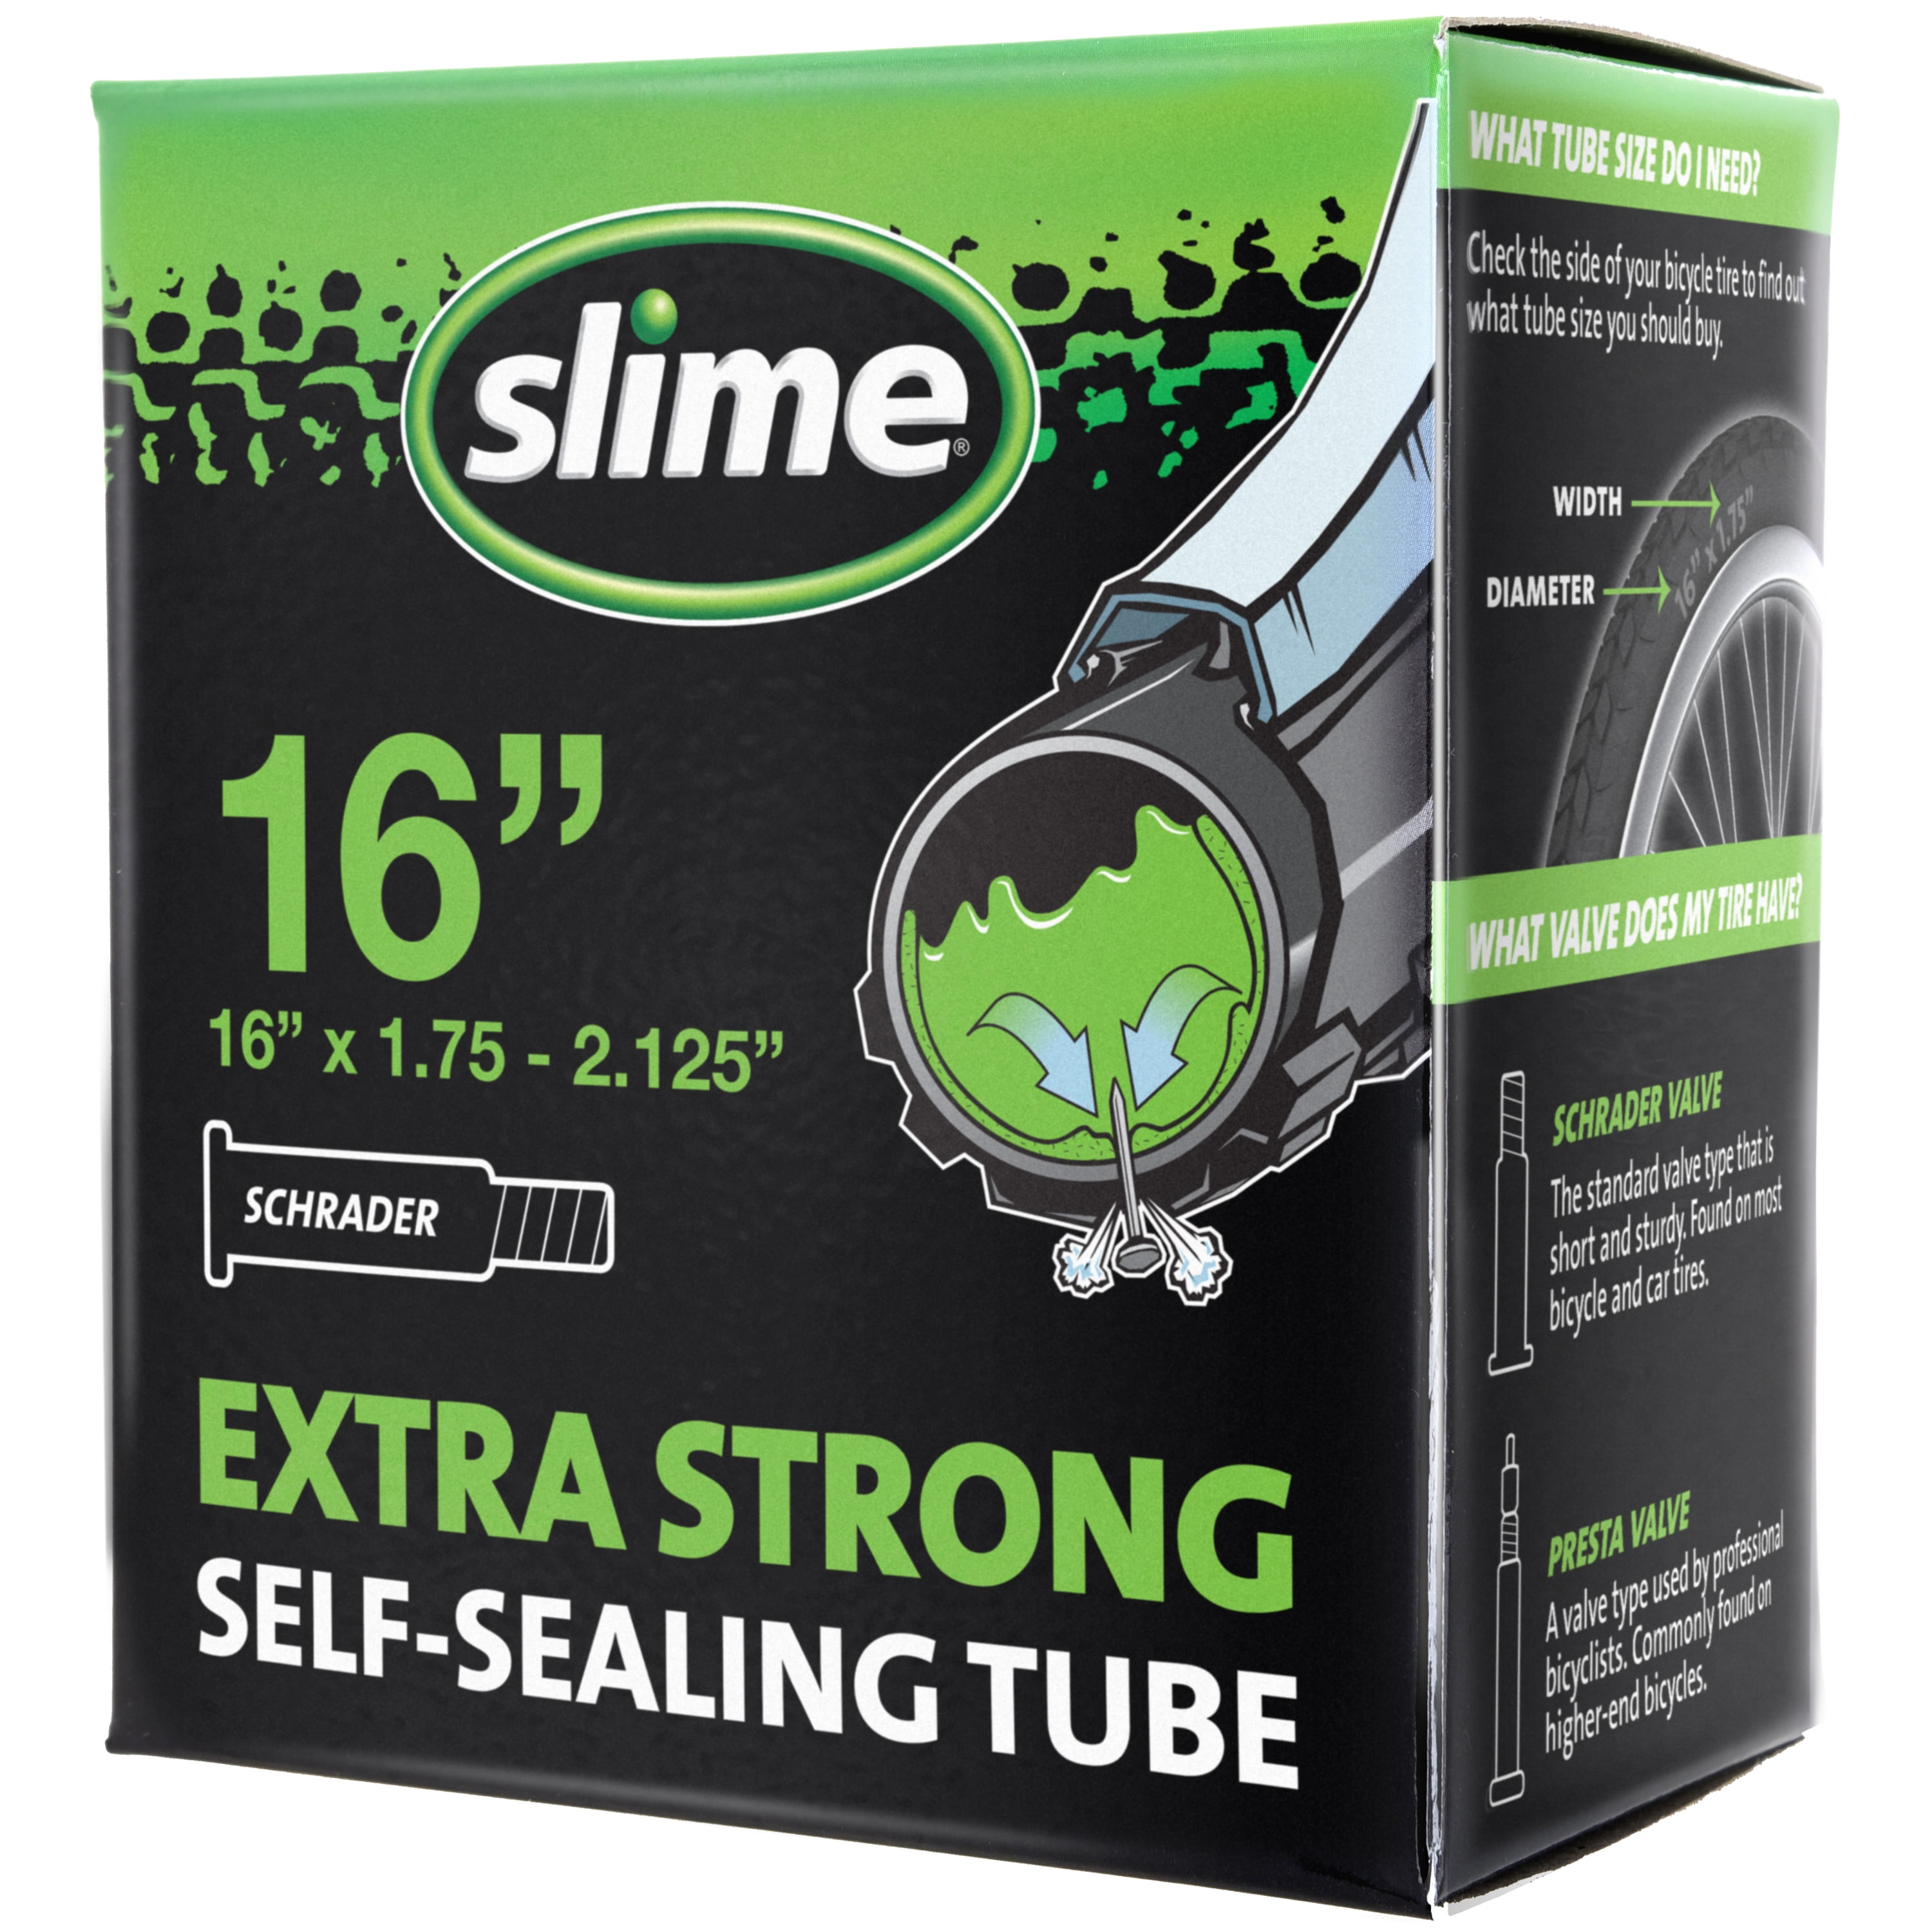 27 Inch Self Sealing Bike Tube Schrader Valve Stem Fixes Bicycles Flat Tires New 